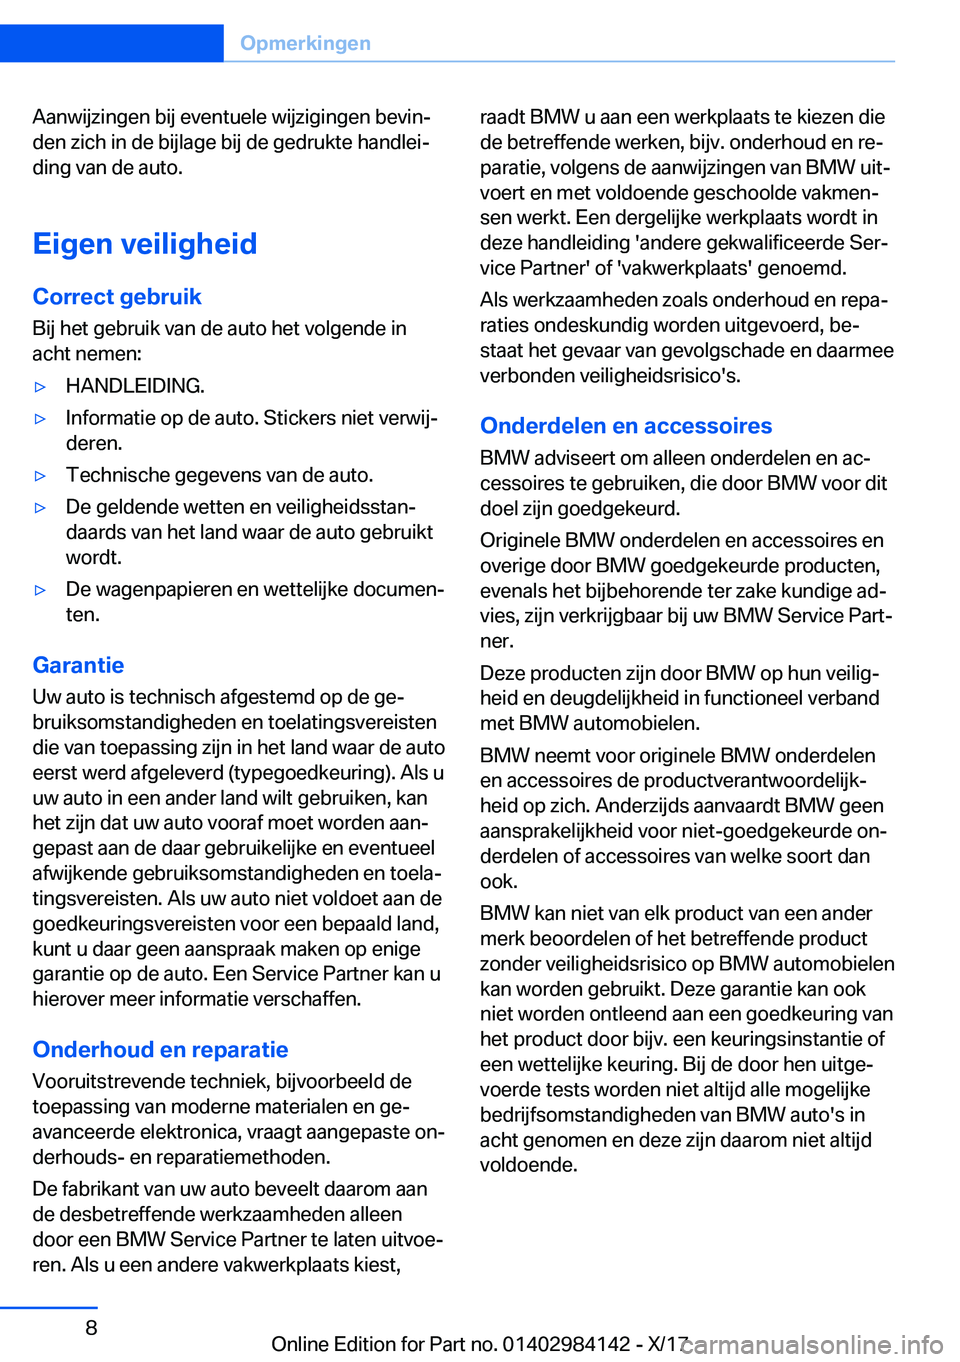 BMW 2 SERIES COUPE 2018  Instructieboekjes (in Dutch) �A�a�n�w�i�j�z�i�n�g�e�n� �b�i�j� �e�v�e�n�t�u�e�l�e� �w�i�j�z�i�g�i�n�g�e�n� �b�e�v�i�nj
�d�e�n� �z�i�c�h� �i�n� �d�e� �b�i�j�l�a�g�e� �b�i�j� �d�e� �g�e�d�r�u�k�t�e� �h�a�n�d�l�e�ij
�d�i�n�g� �v�a